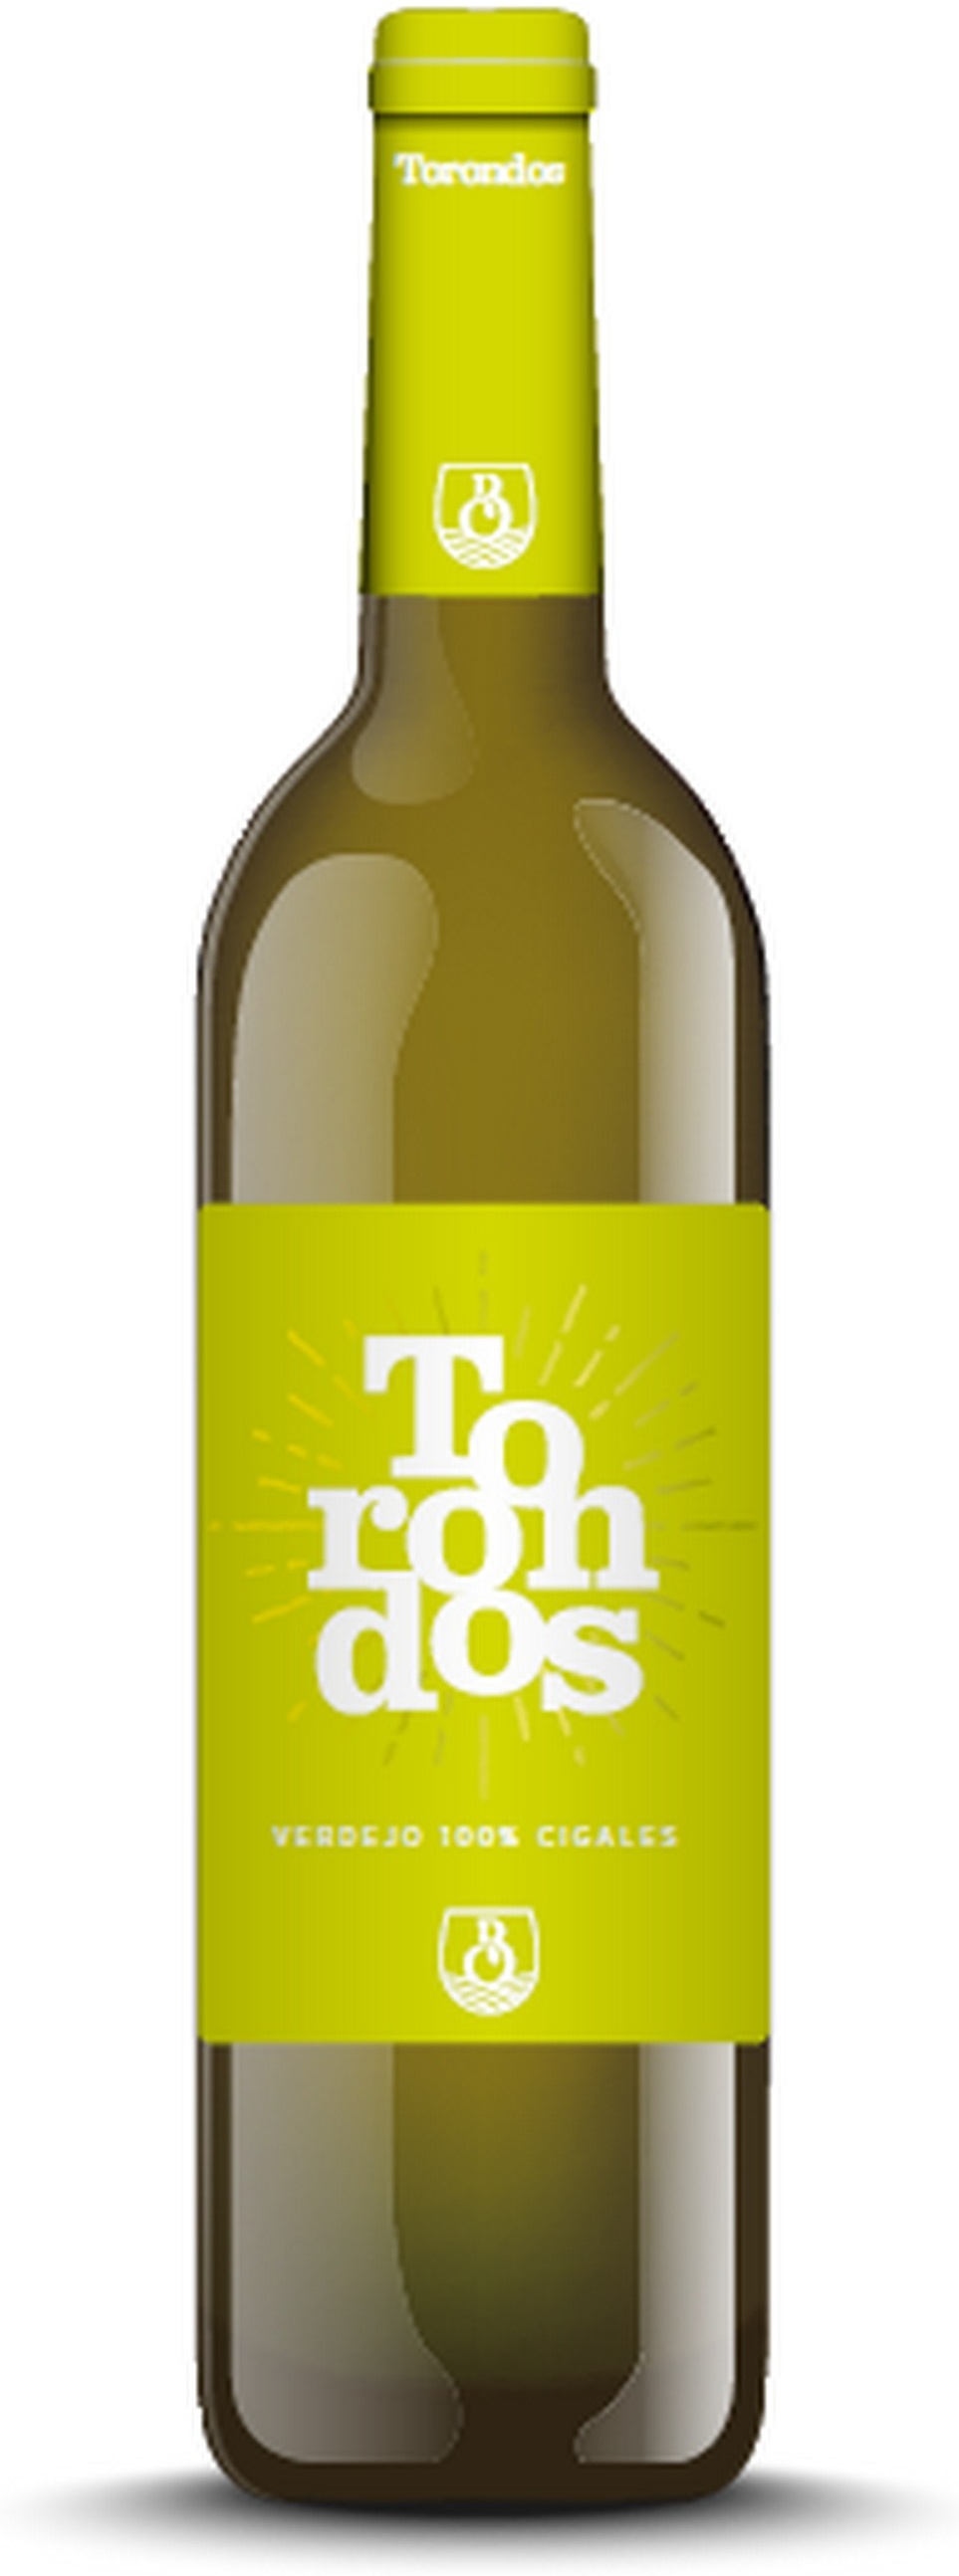 torondos-verdejo-2019